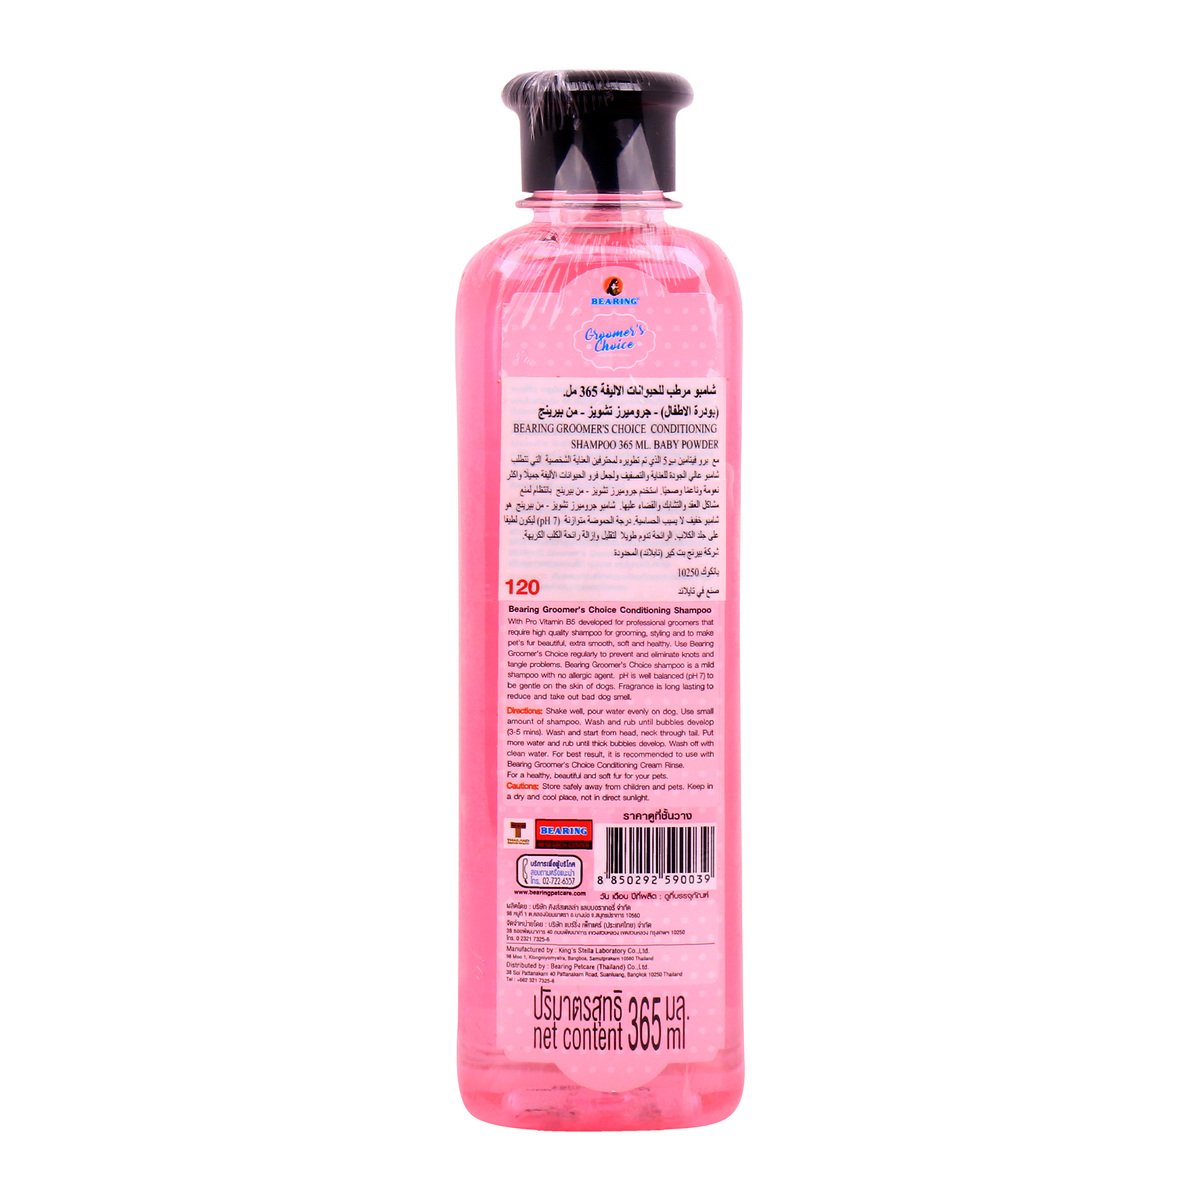 Bearing Dog Groomer's Choice Conditioning Shampoo, 365 ml